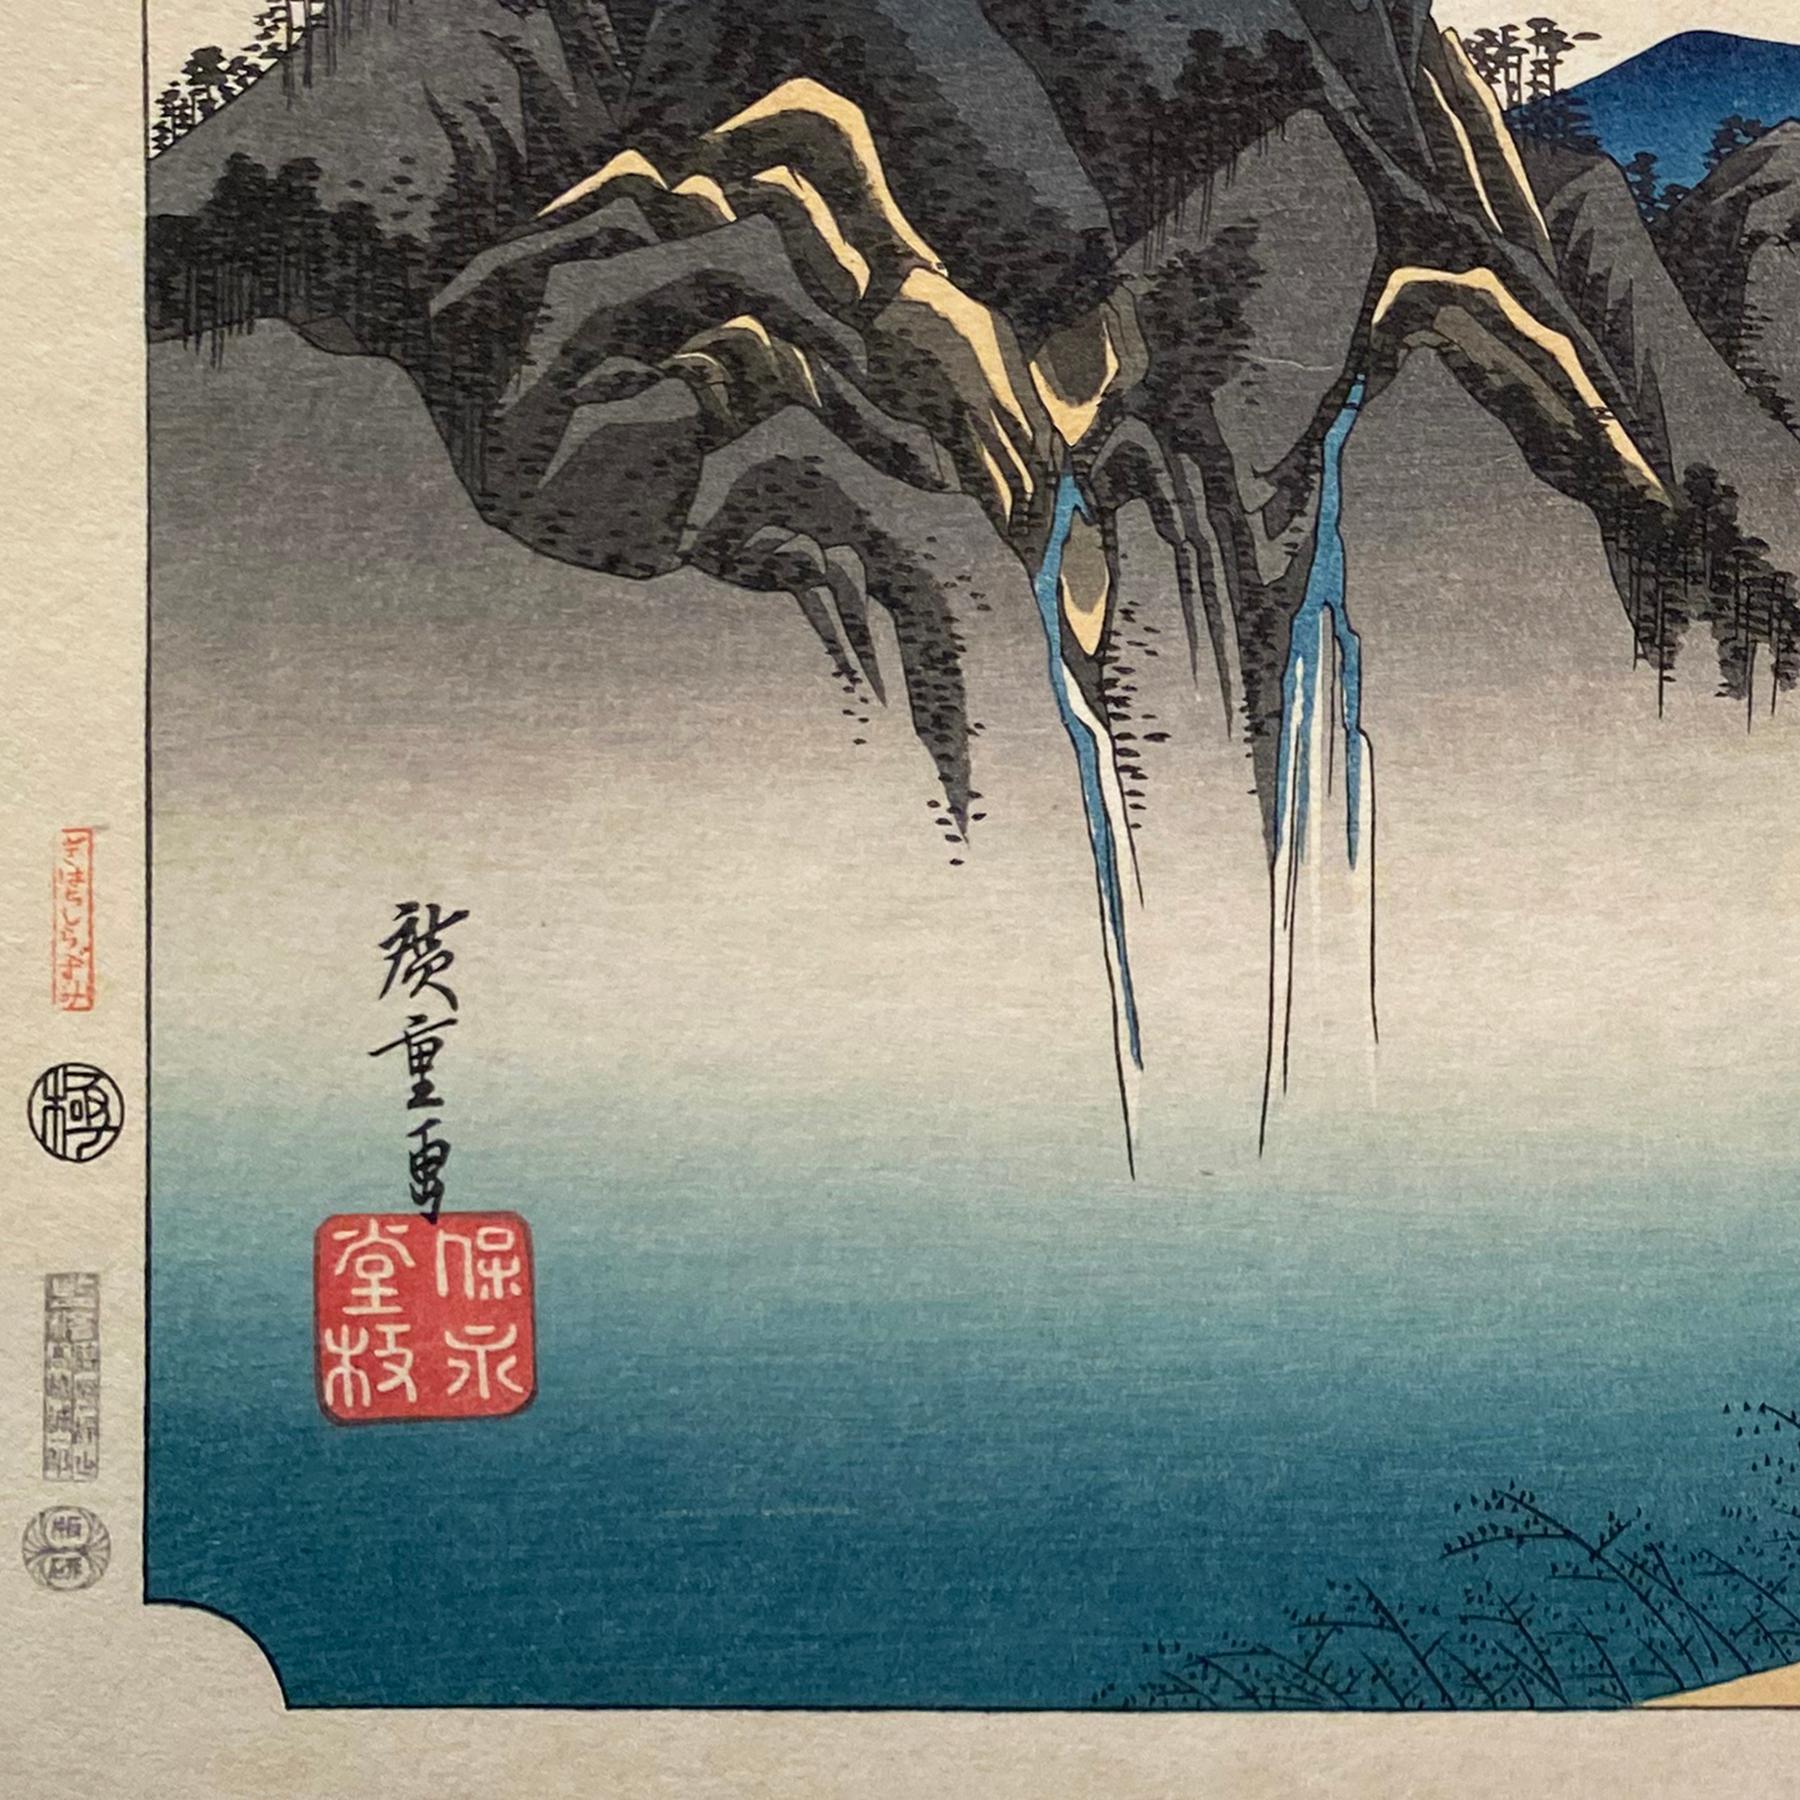 'Fudesute Mountain', After Utagawa Hiroshige 歌川廣重, Ukiyo-e Woodblock, Tokaido - Print by Utagawa Hiroshige (Ando Hiroshige)